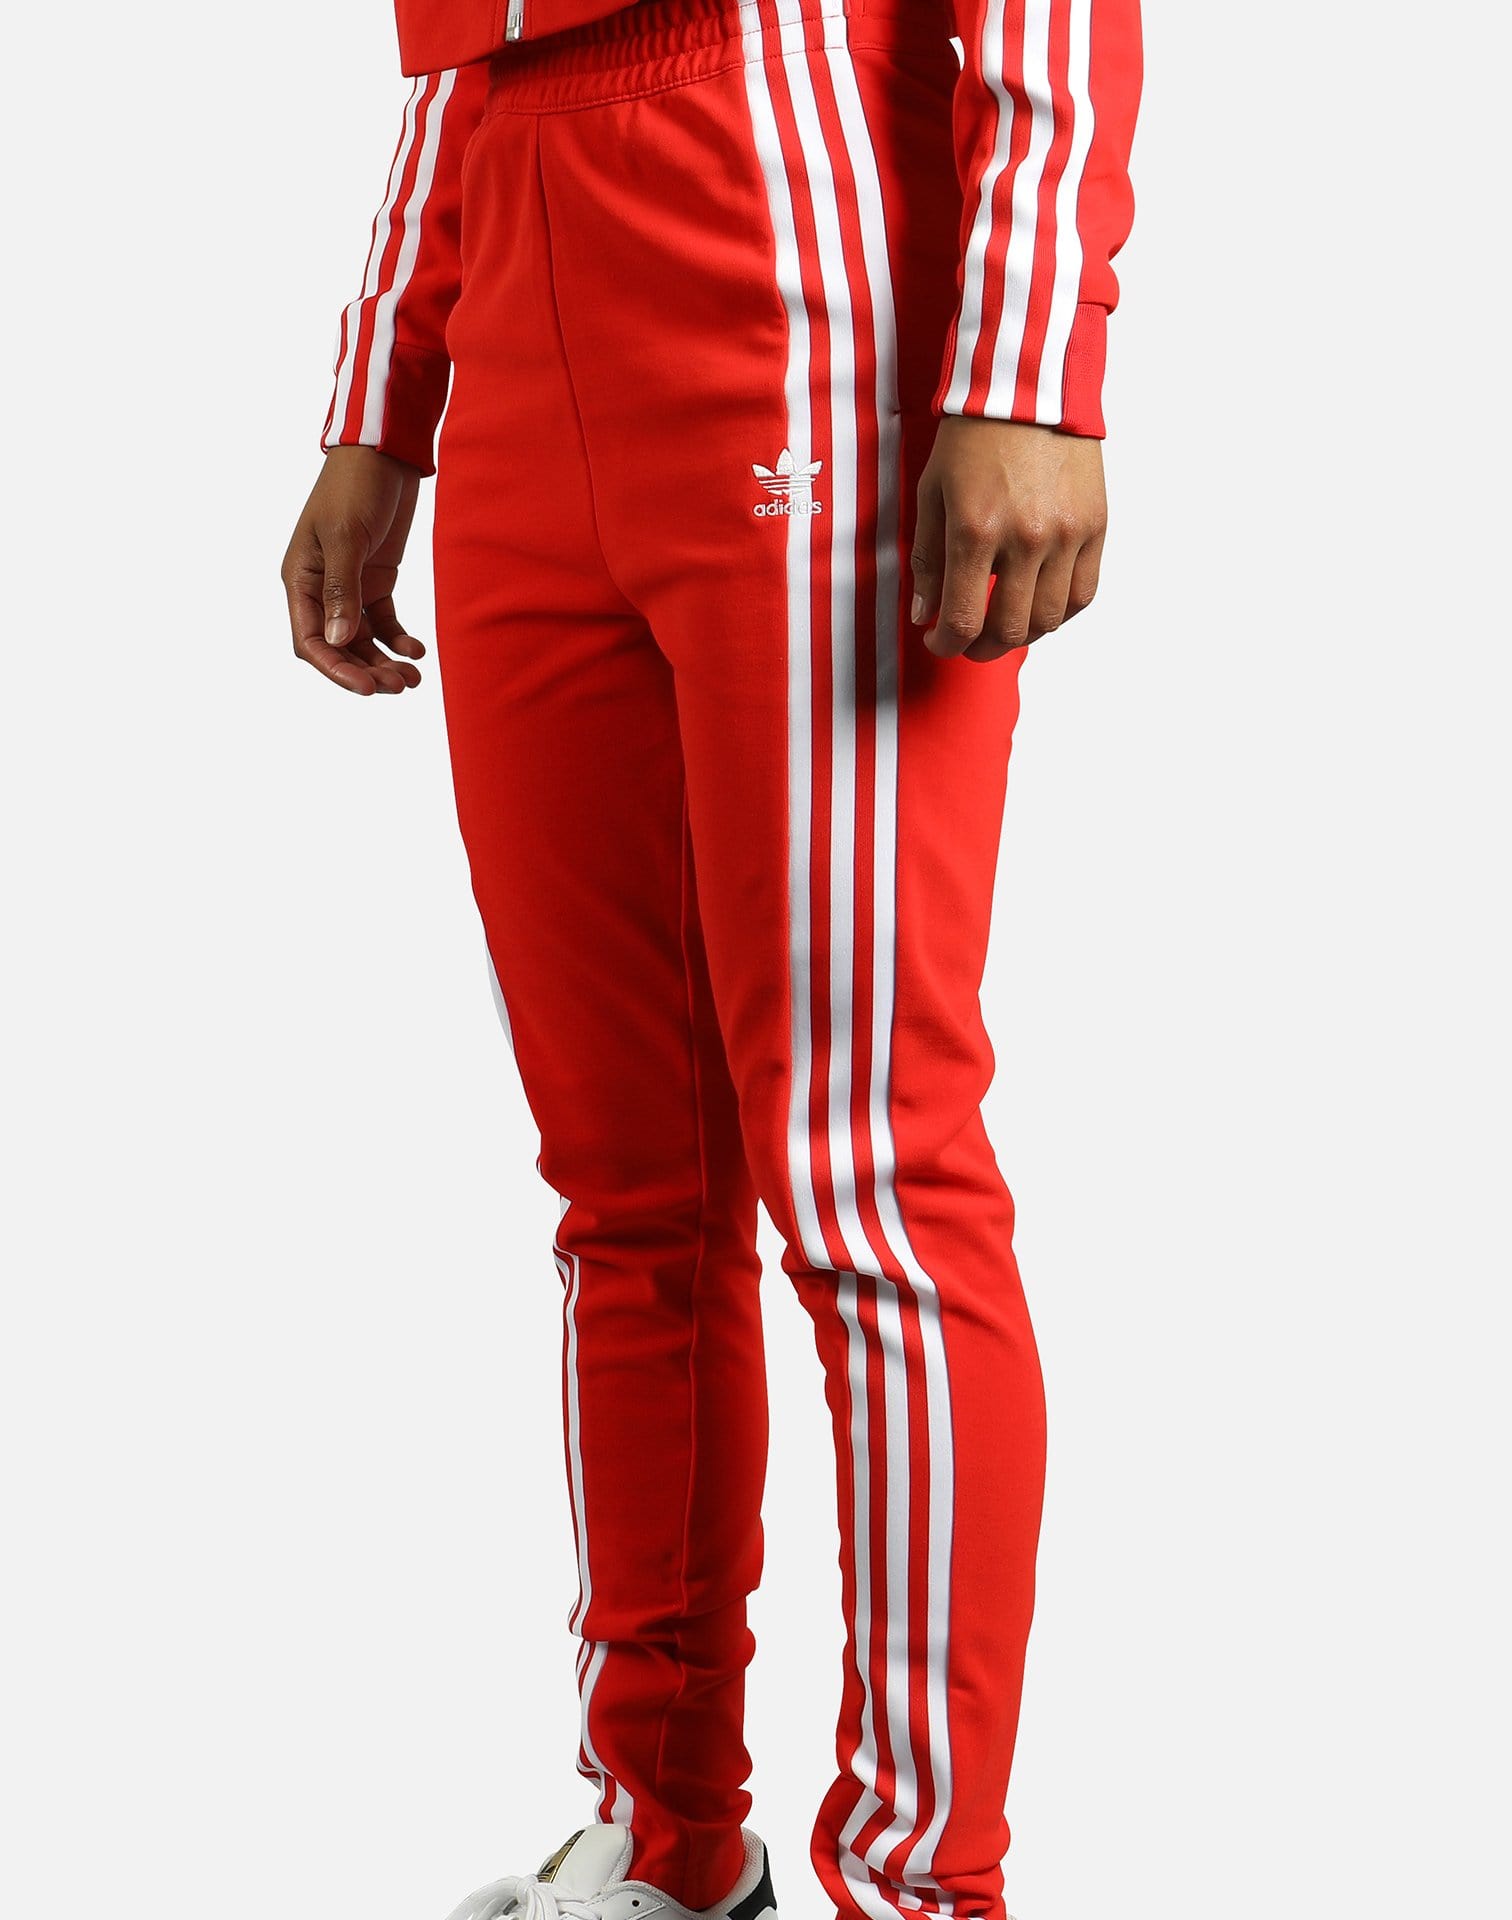 Adidas 3-Stripe Leggings – DTLR